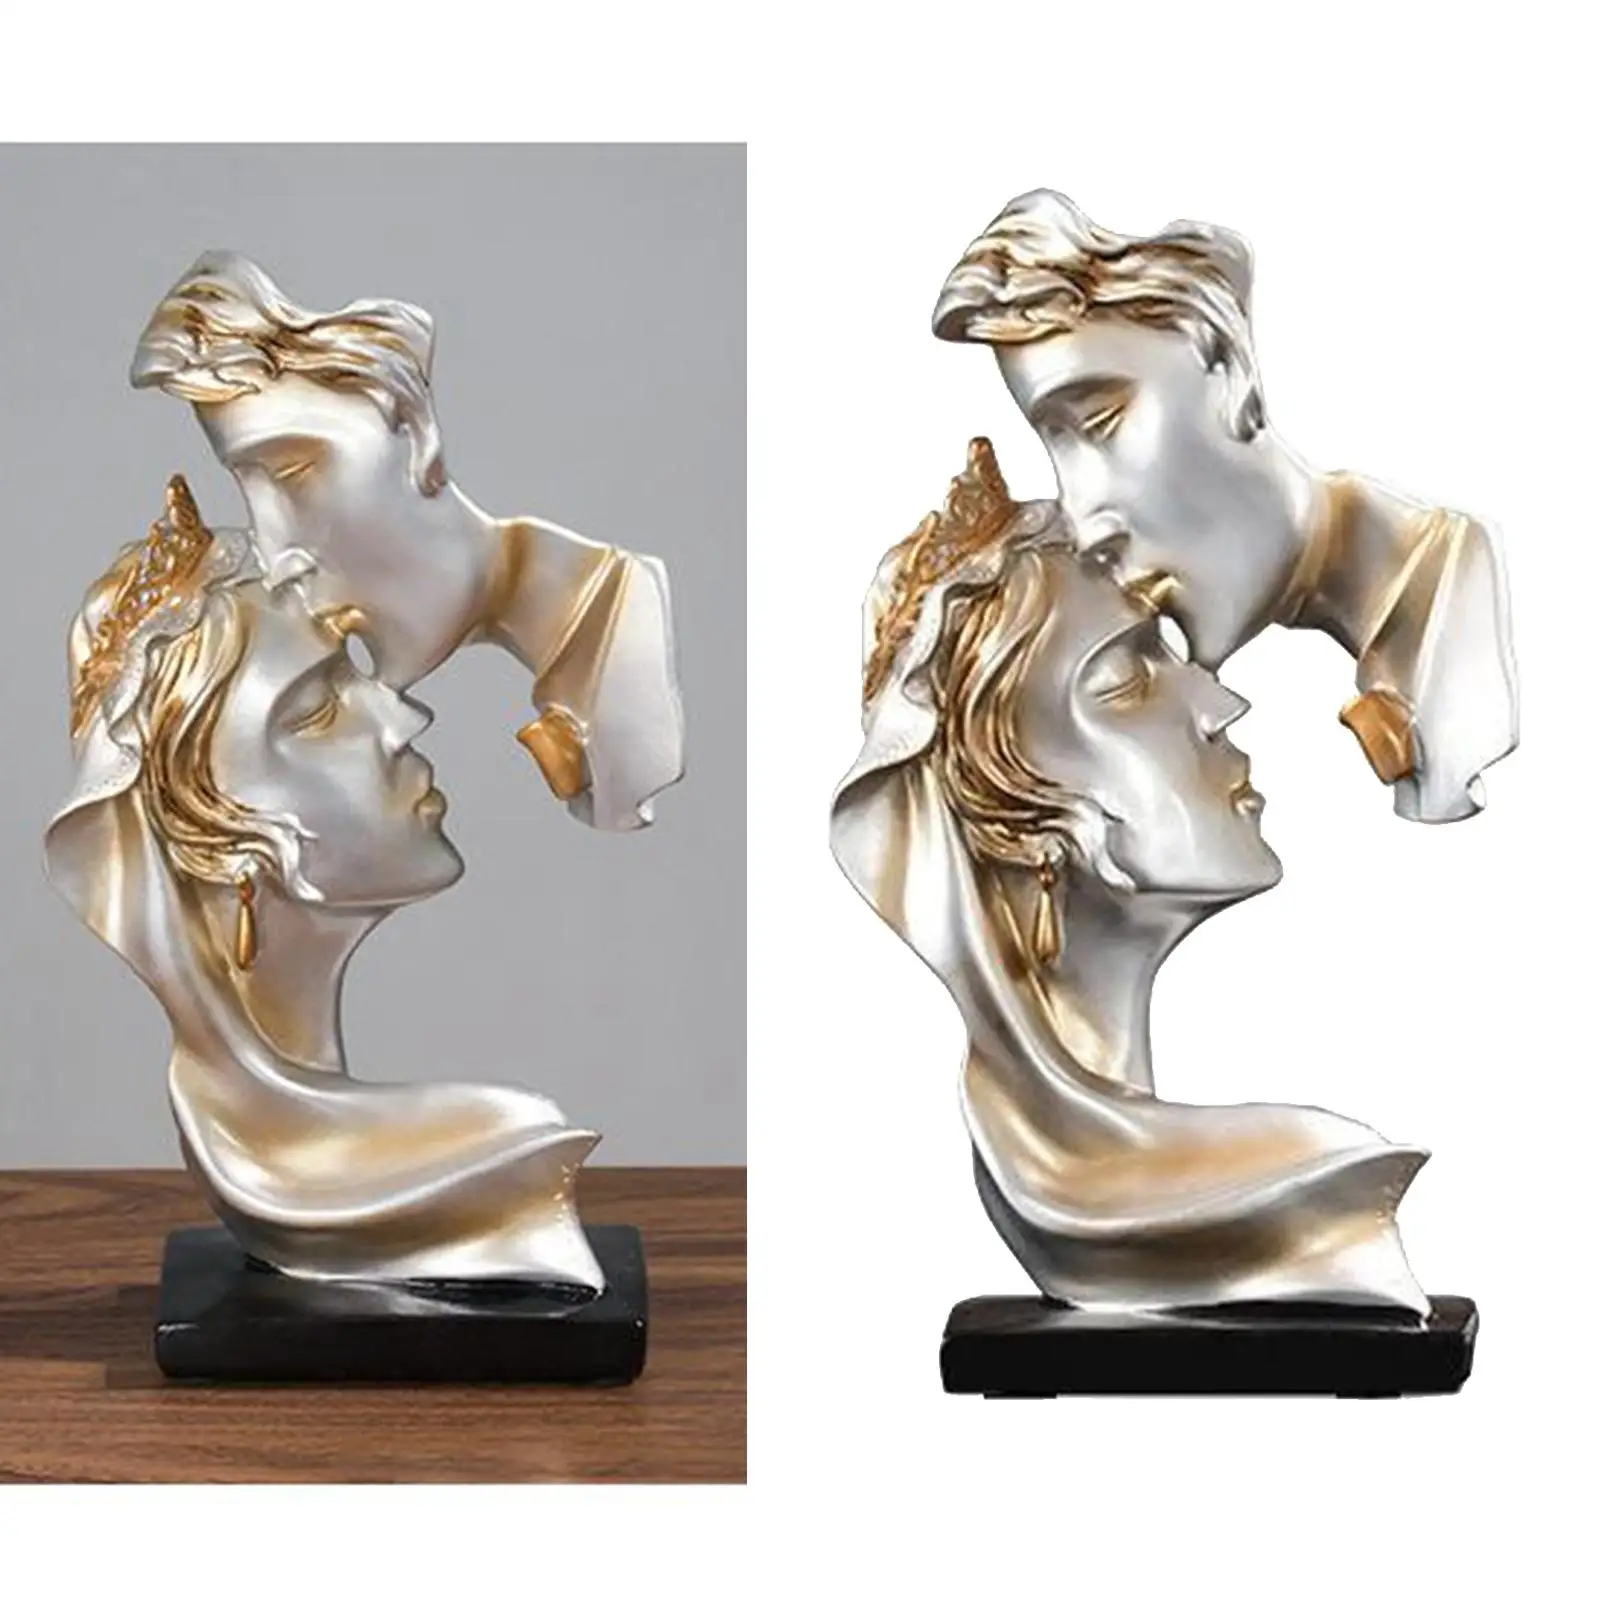 2x Couples Statue Home Decor Ornament Mini Resin Figurines Collectible Gray